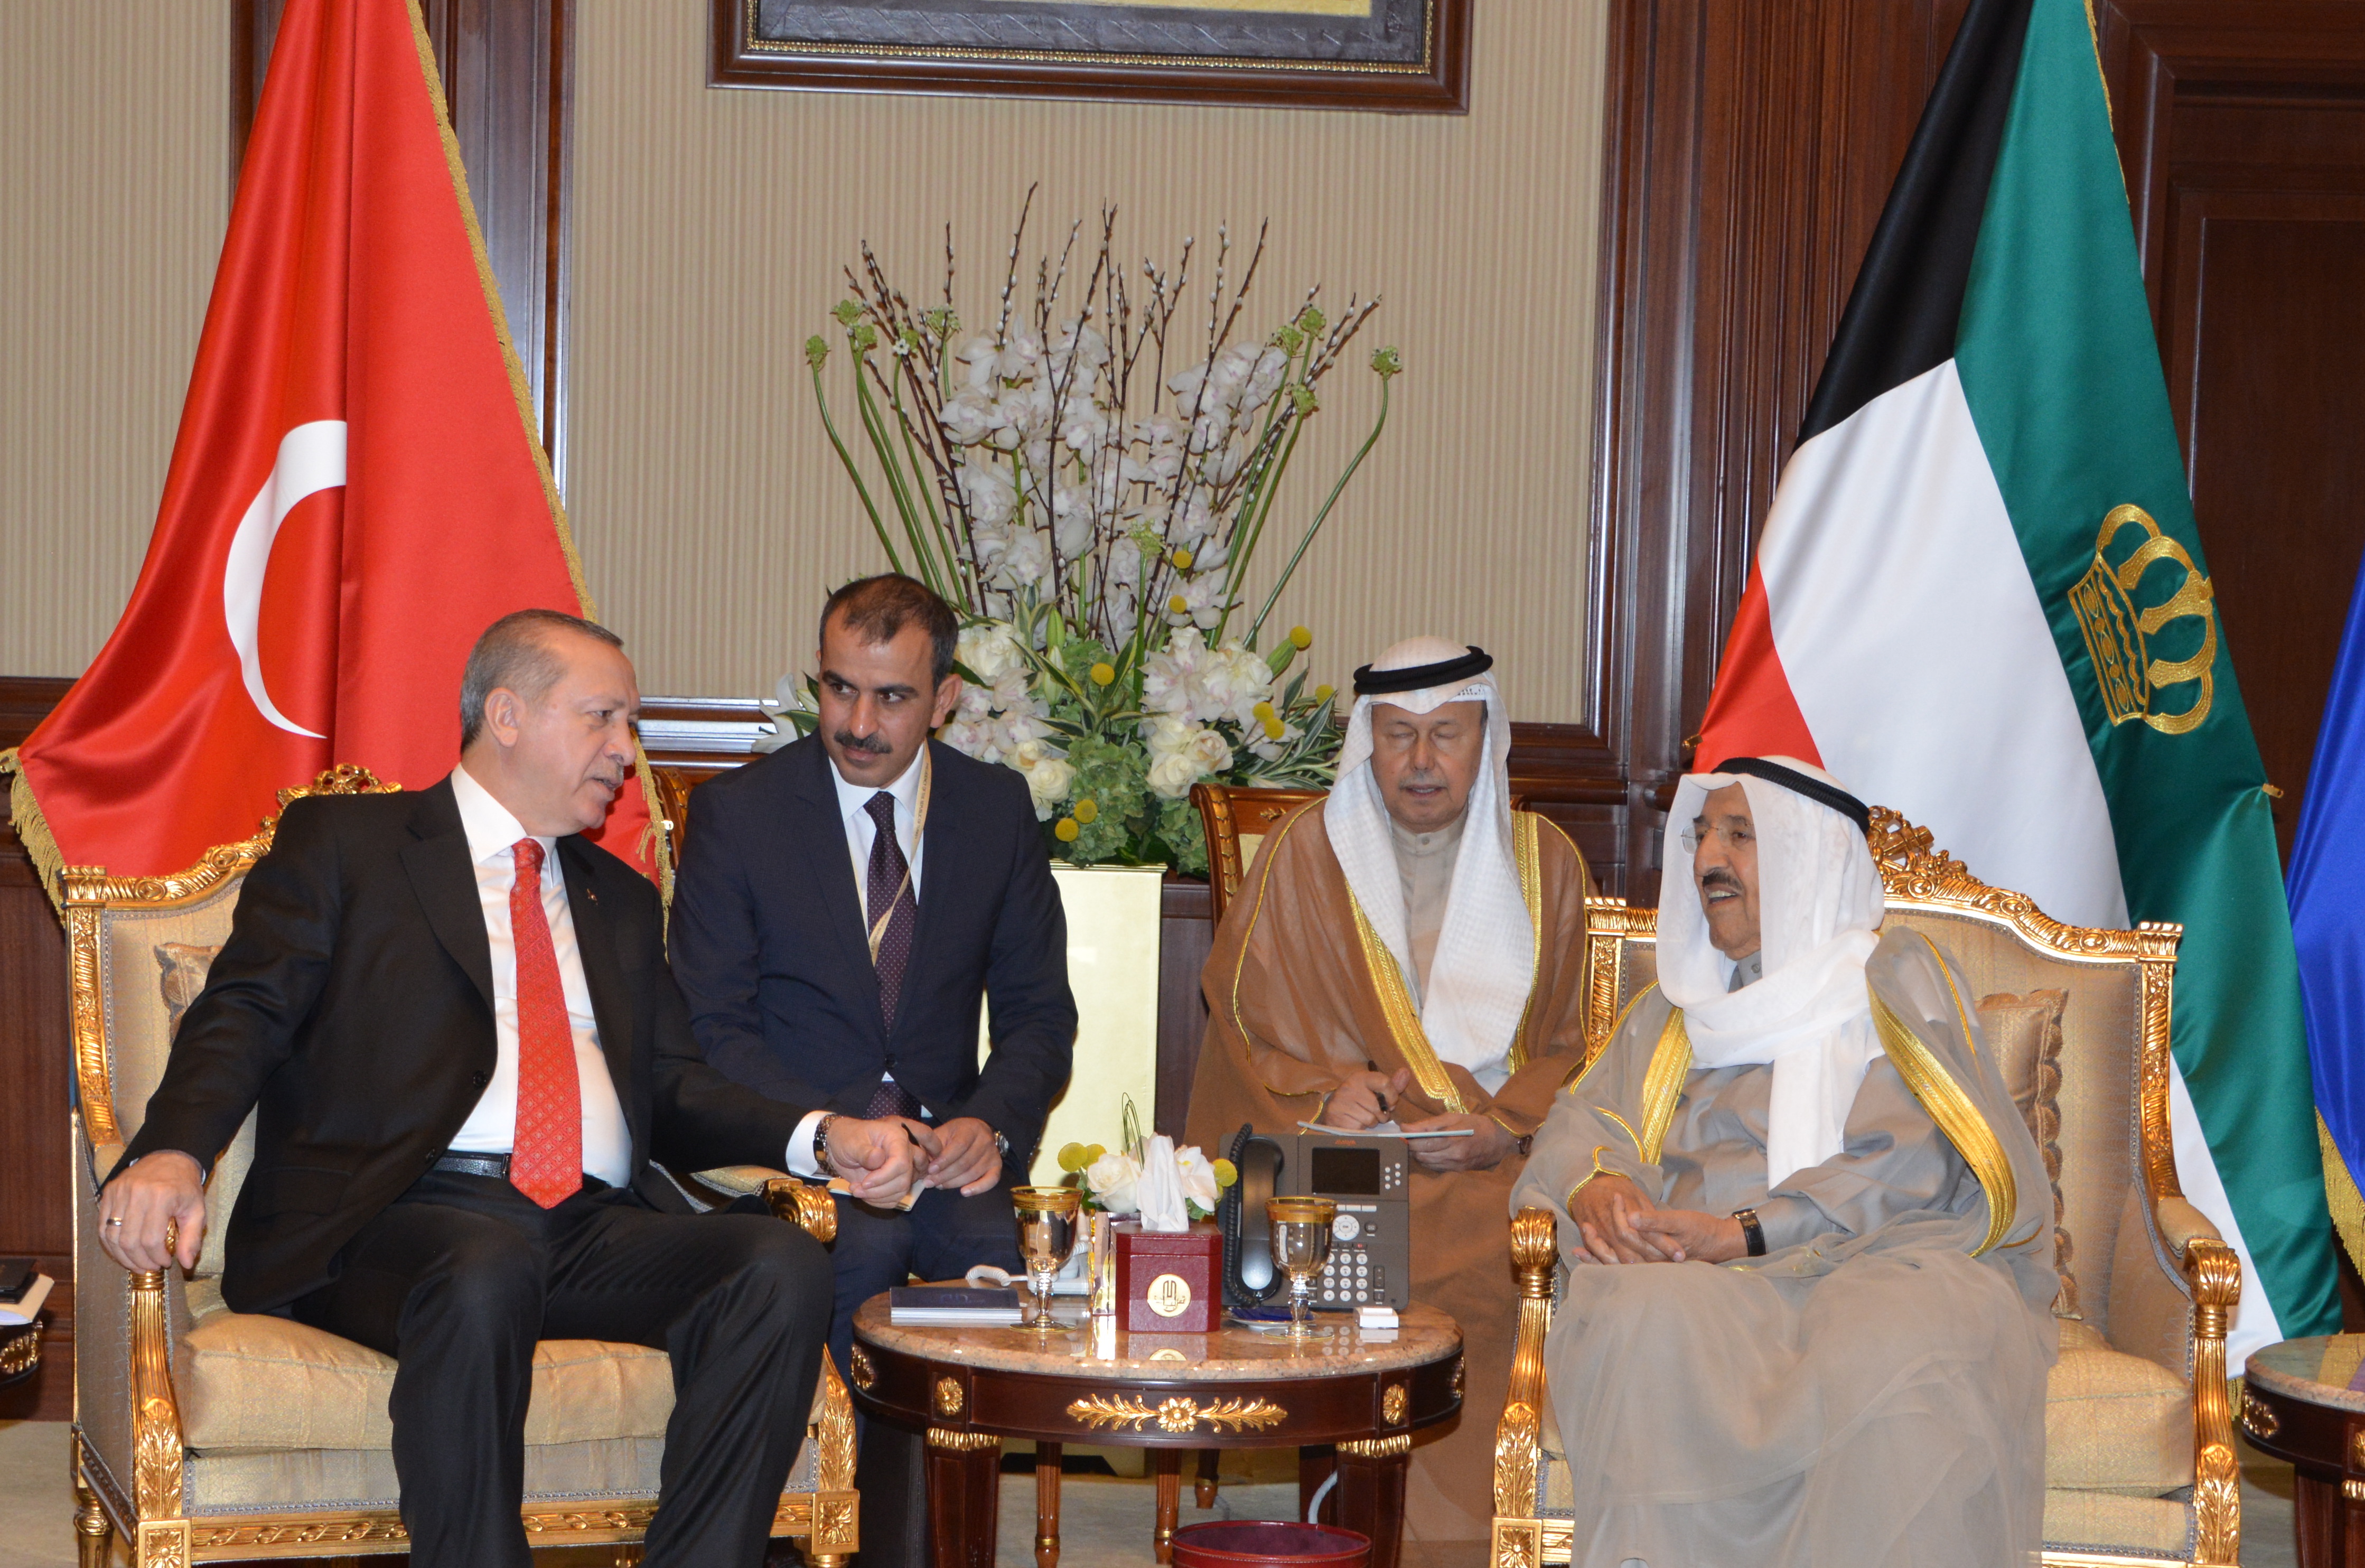 His Highness the Amir Sheikh Sabah Al-Ahmad Al-Jaber Al-Sabah received Turkish President Recep Tayyip Erdogan